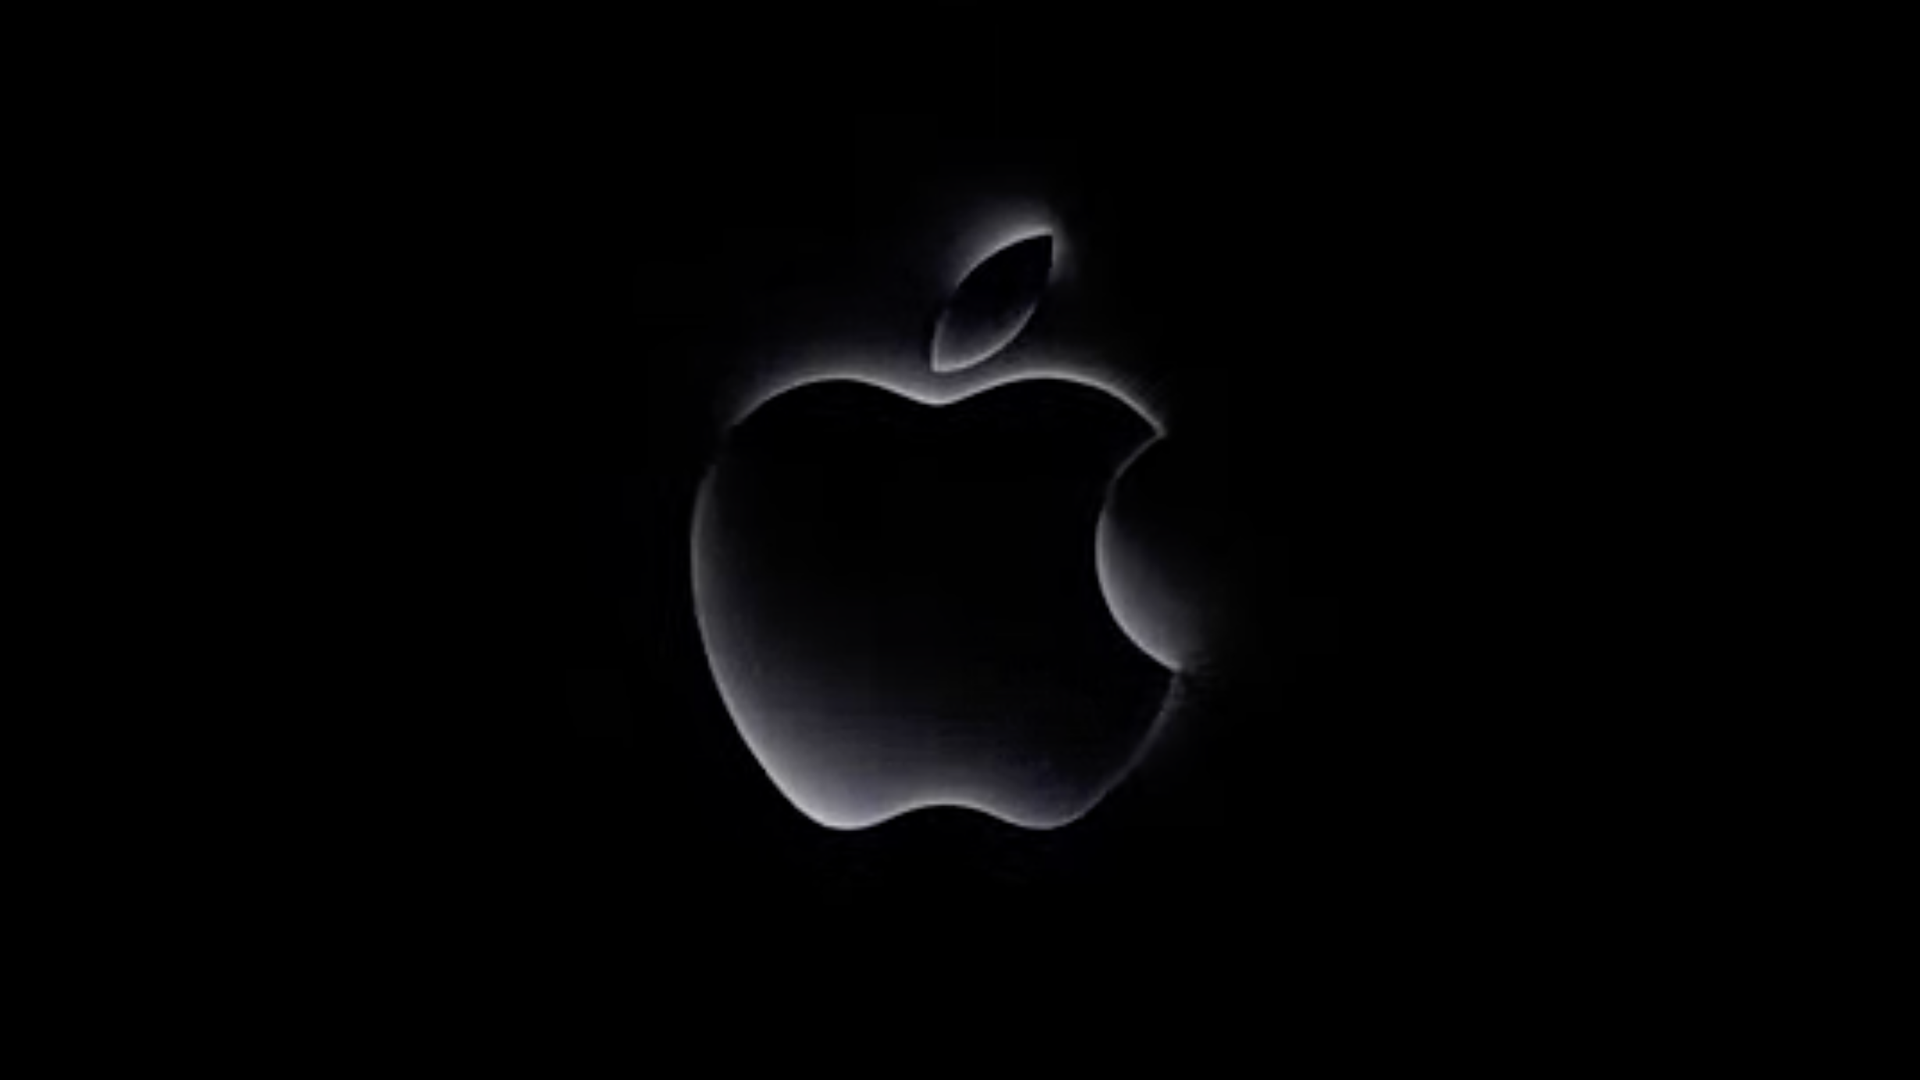 A grey metallic Apple logo against a black background